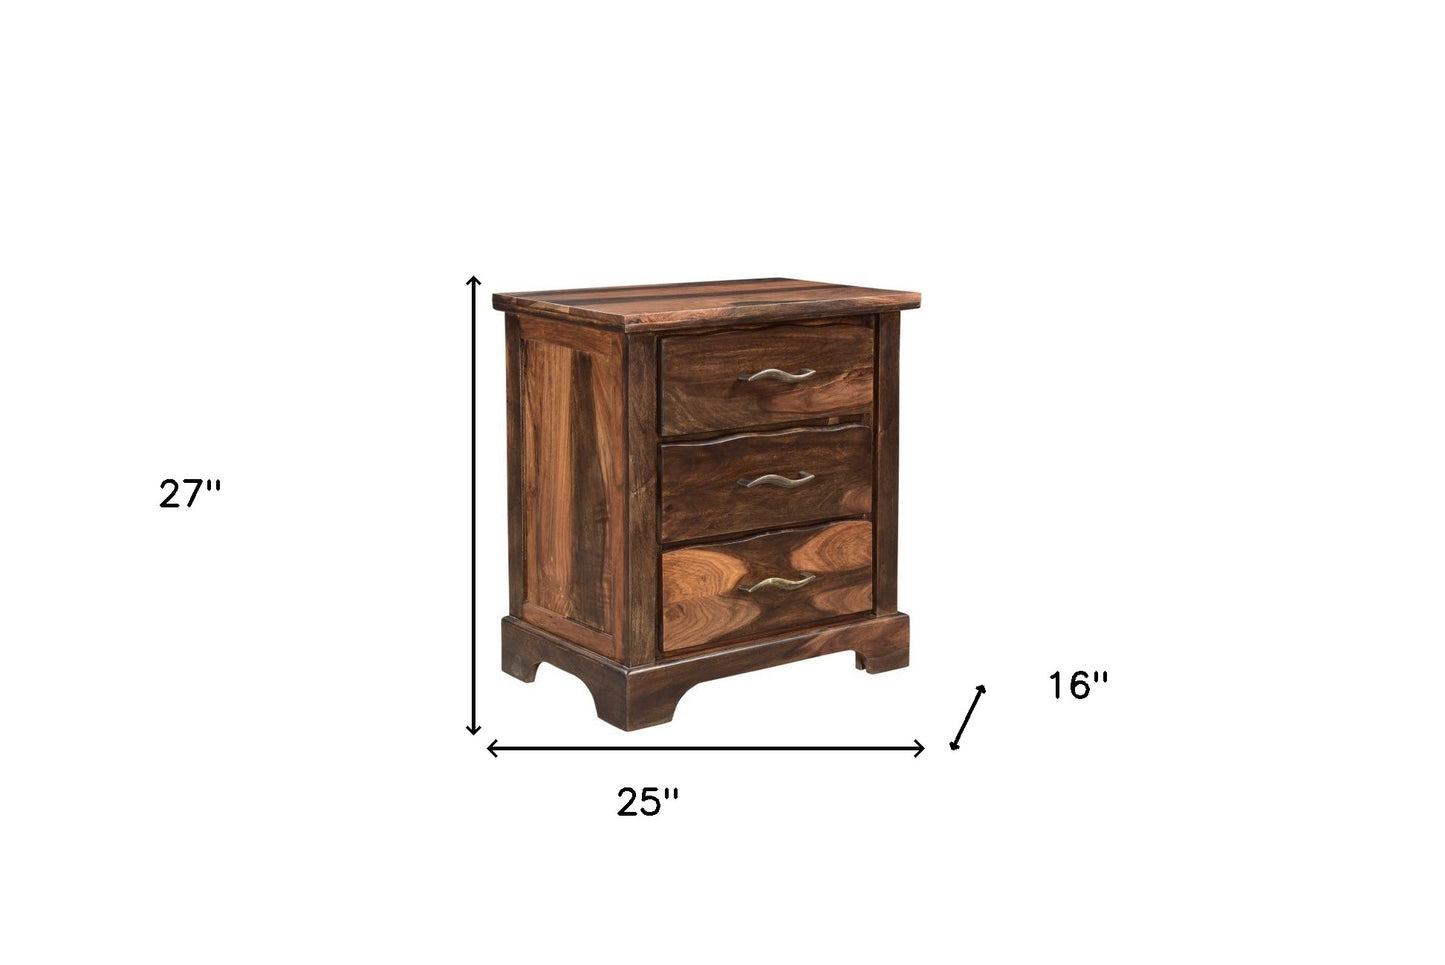 27" Dark Brown Three Drawer Solid Wood Nightstand